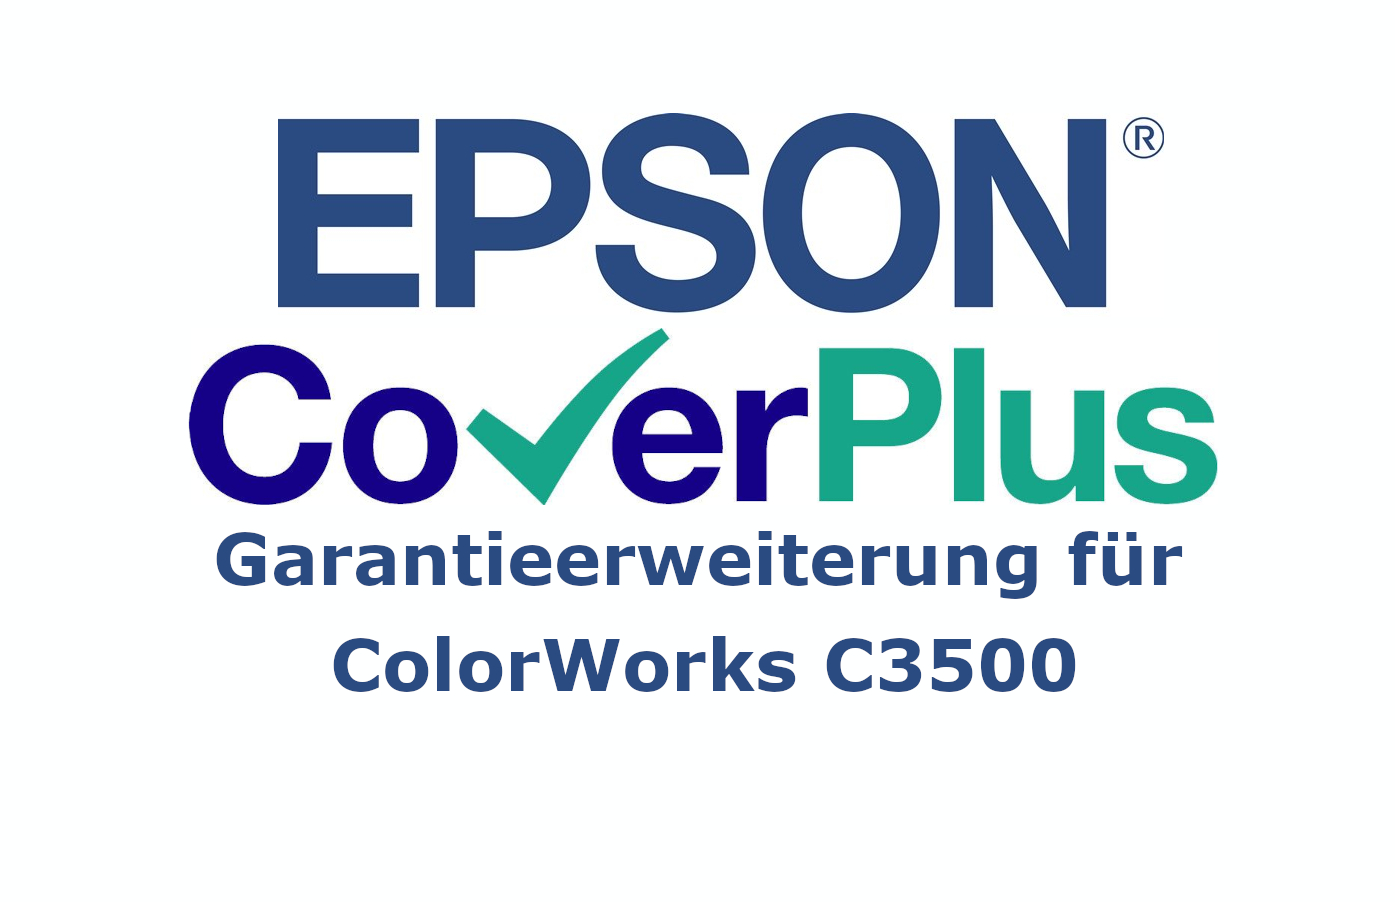 Kuva EPSON ColorWorks Series C3500 - CoverPlus
